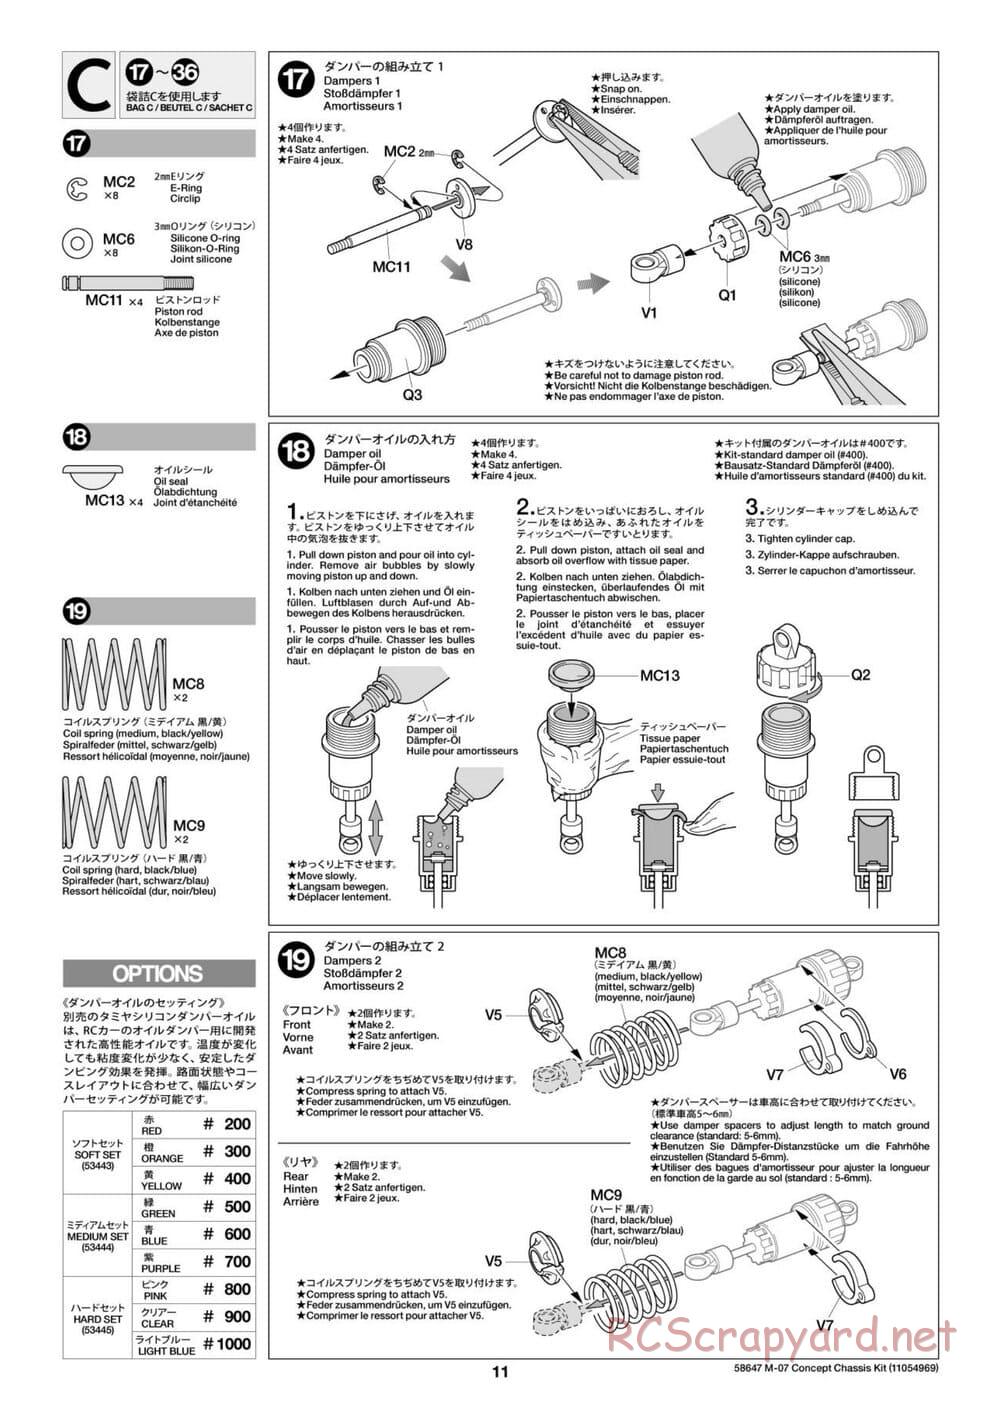 Tamiya - M-07 Concept Chassis - Manual - Page 11